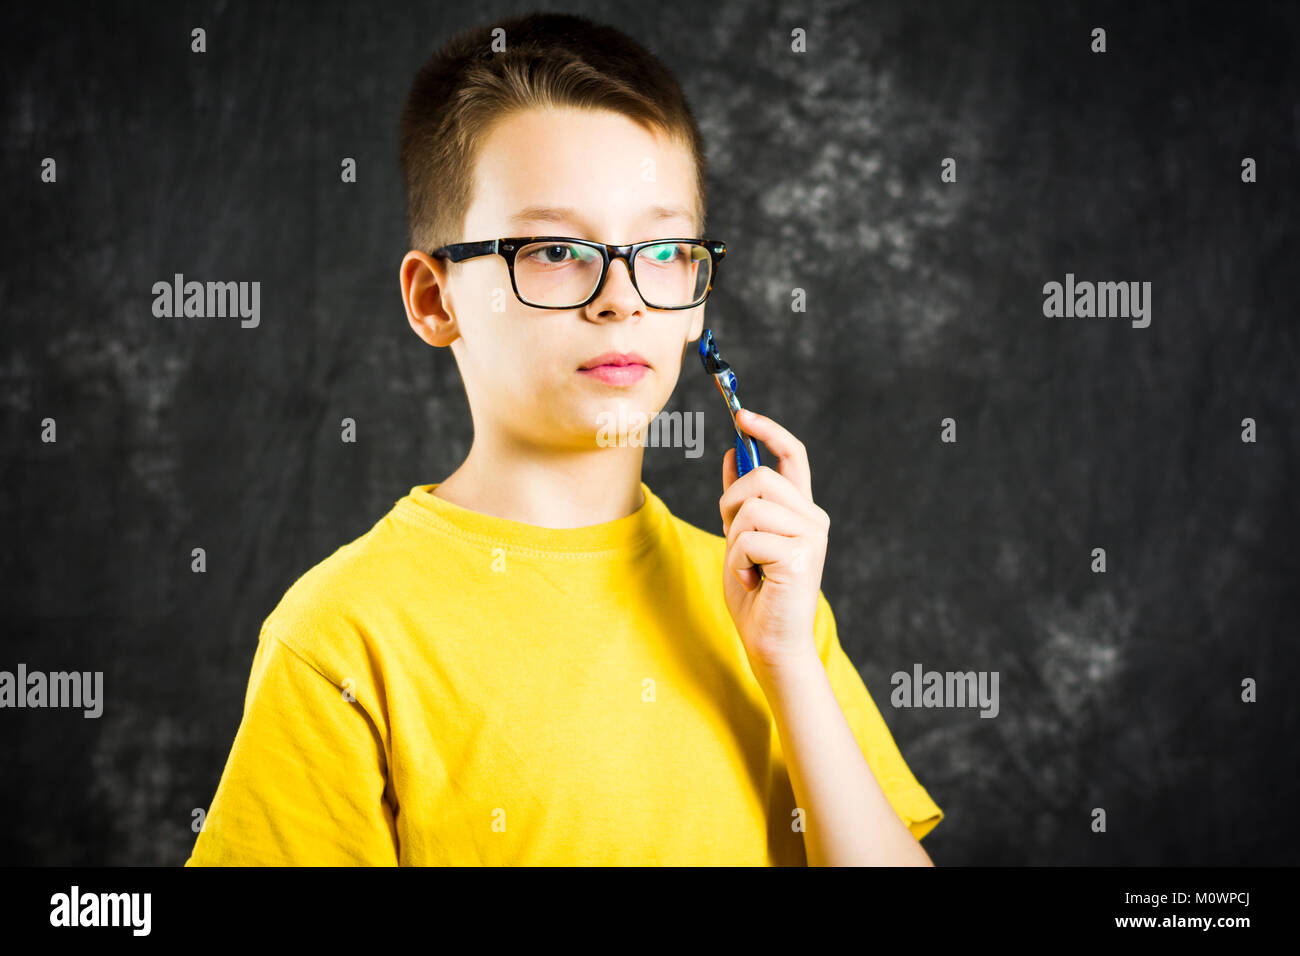 Teenage boy holding a shaver against dark background Stock Photo